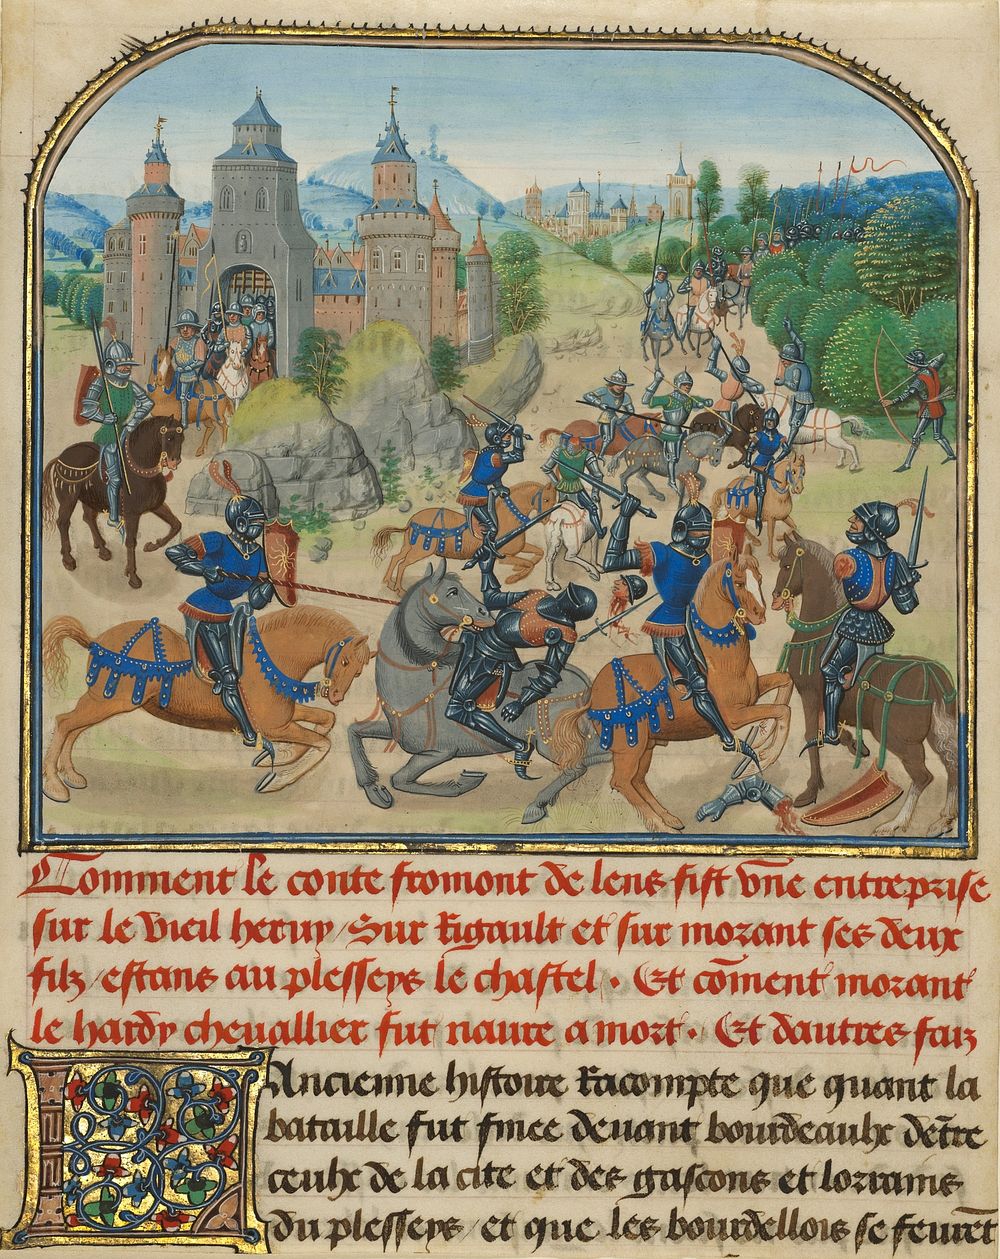 Fromont de Lens Leaving Bordeaux and the Battle against the Army of Gasgogne by Loyset Liédet and Pol Fruit